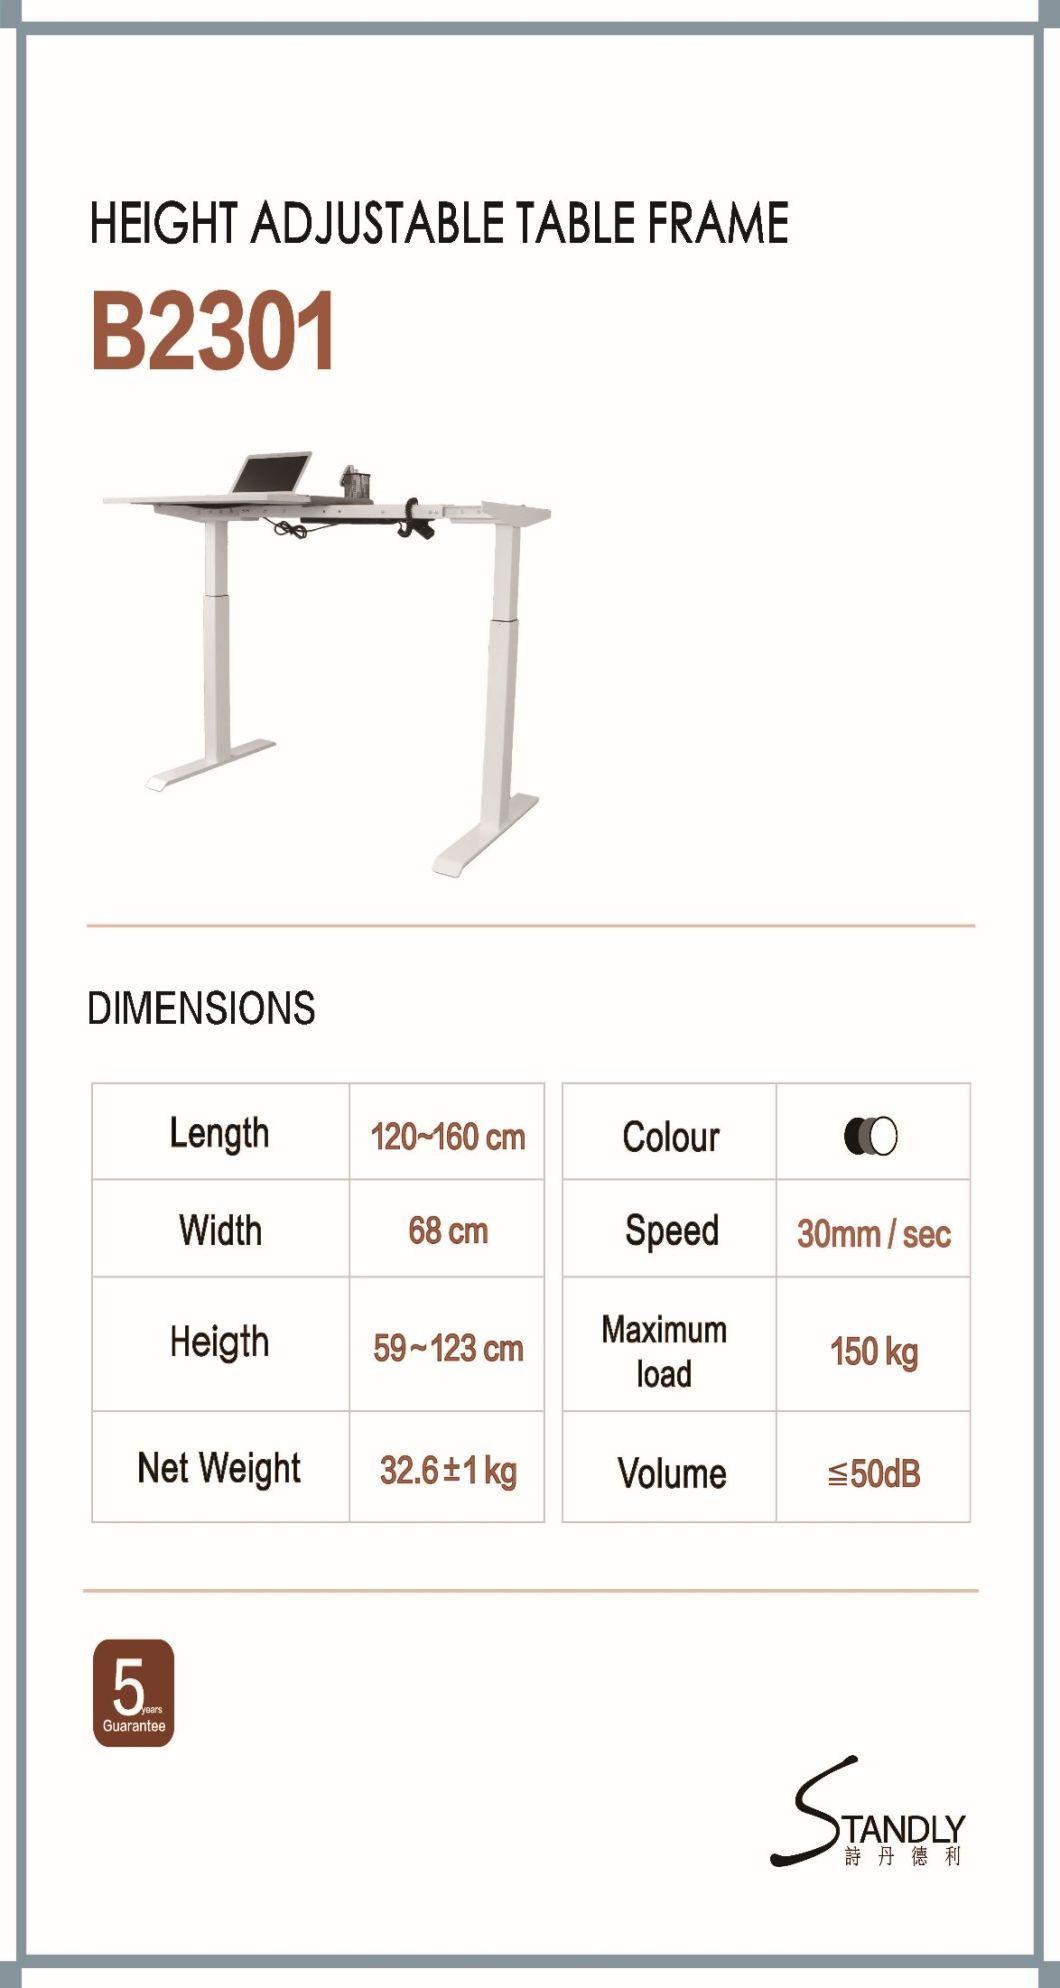 Smart Electric Lift Table Standing Computer Desk Office Desk Mobile Desk Bedroom Learning Desk Home Desk Height Adjustable Table with Single Motor